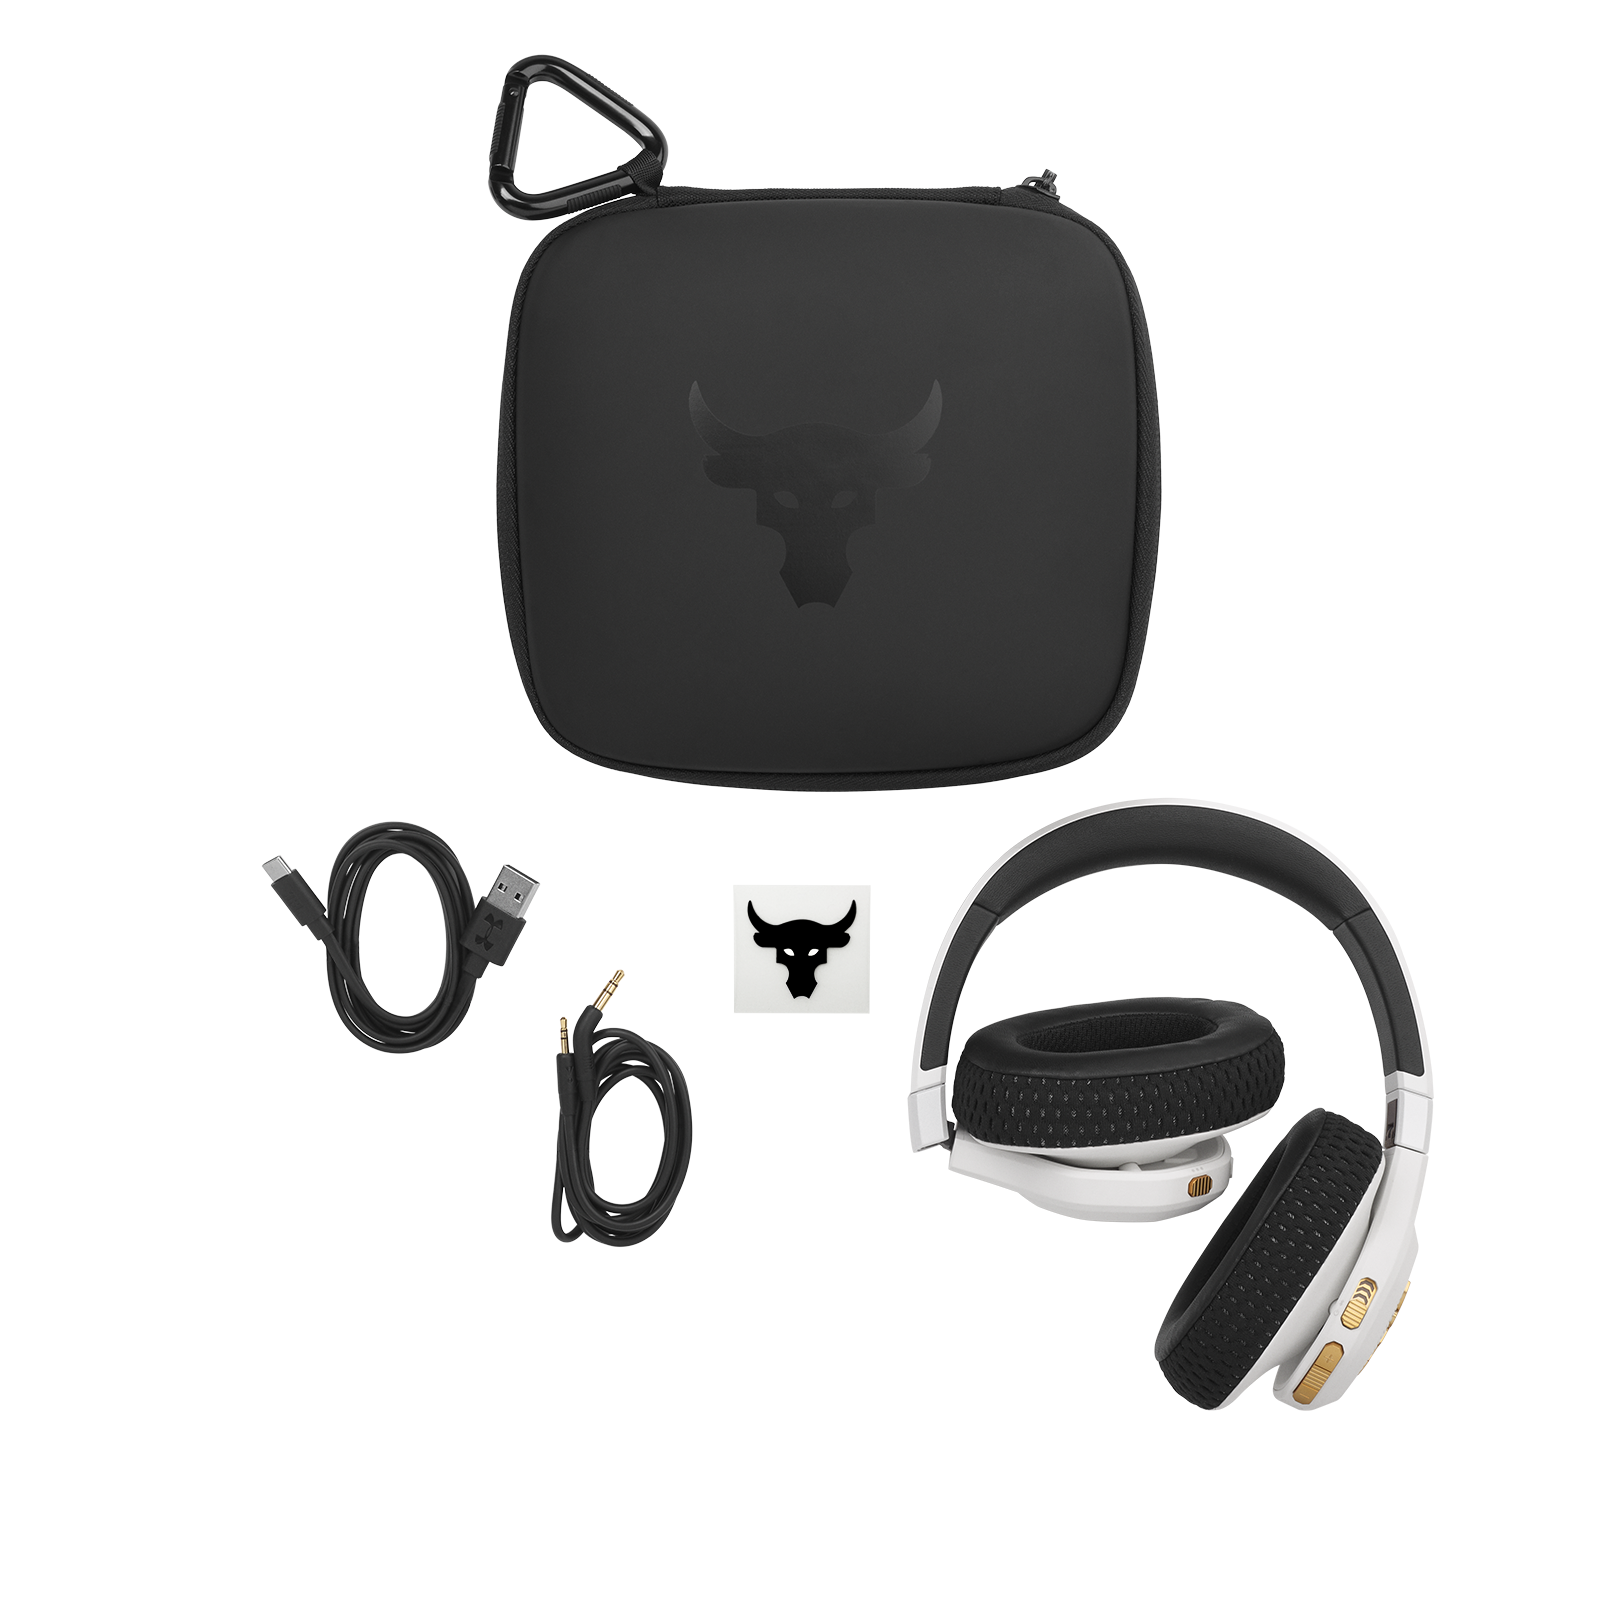 UA Project Rock Over-Ear Training Headphones - Engineered by JBL - White - Over-Ear ANC Sport Headphones - Detailshot 5